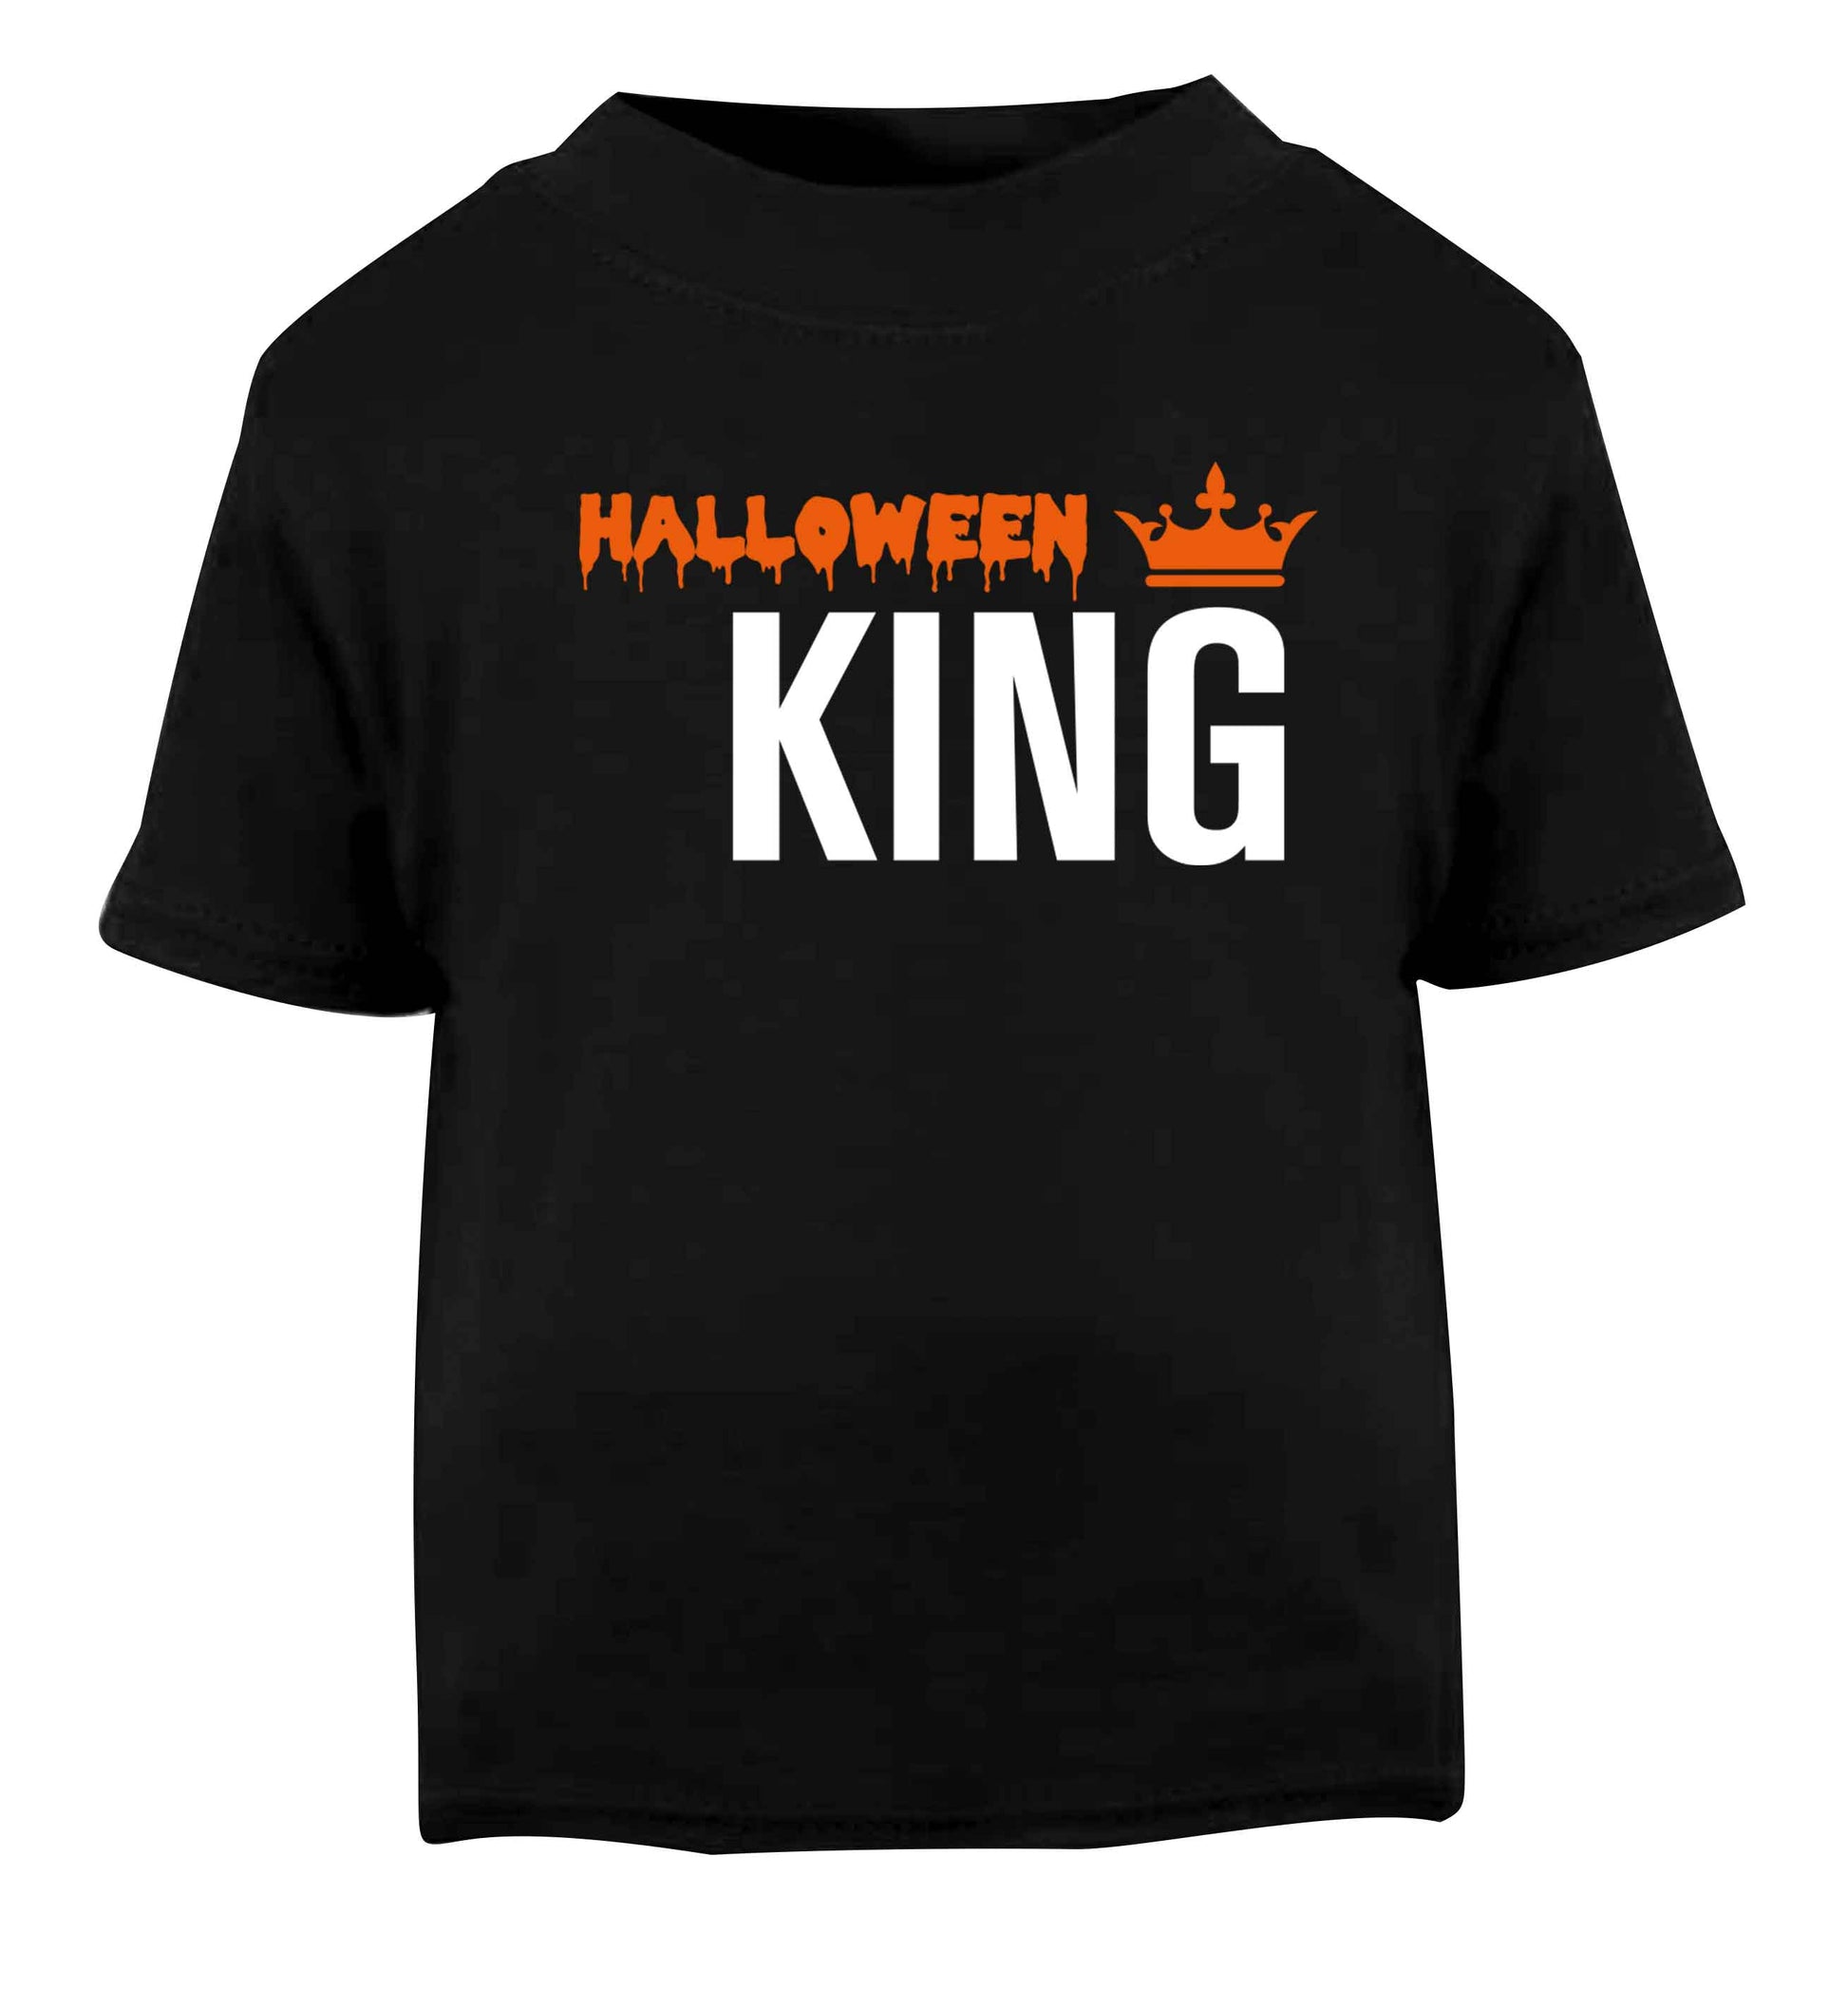 Halloween king Black baby toddler Tshirt 2 years